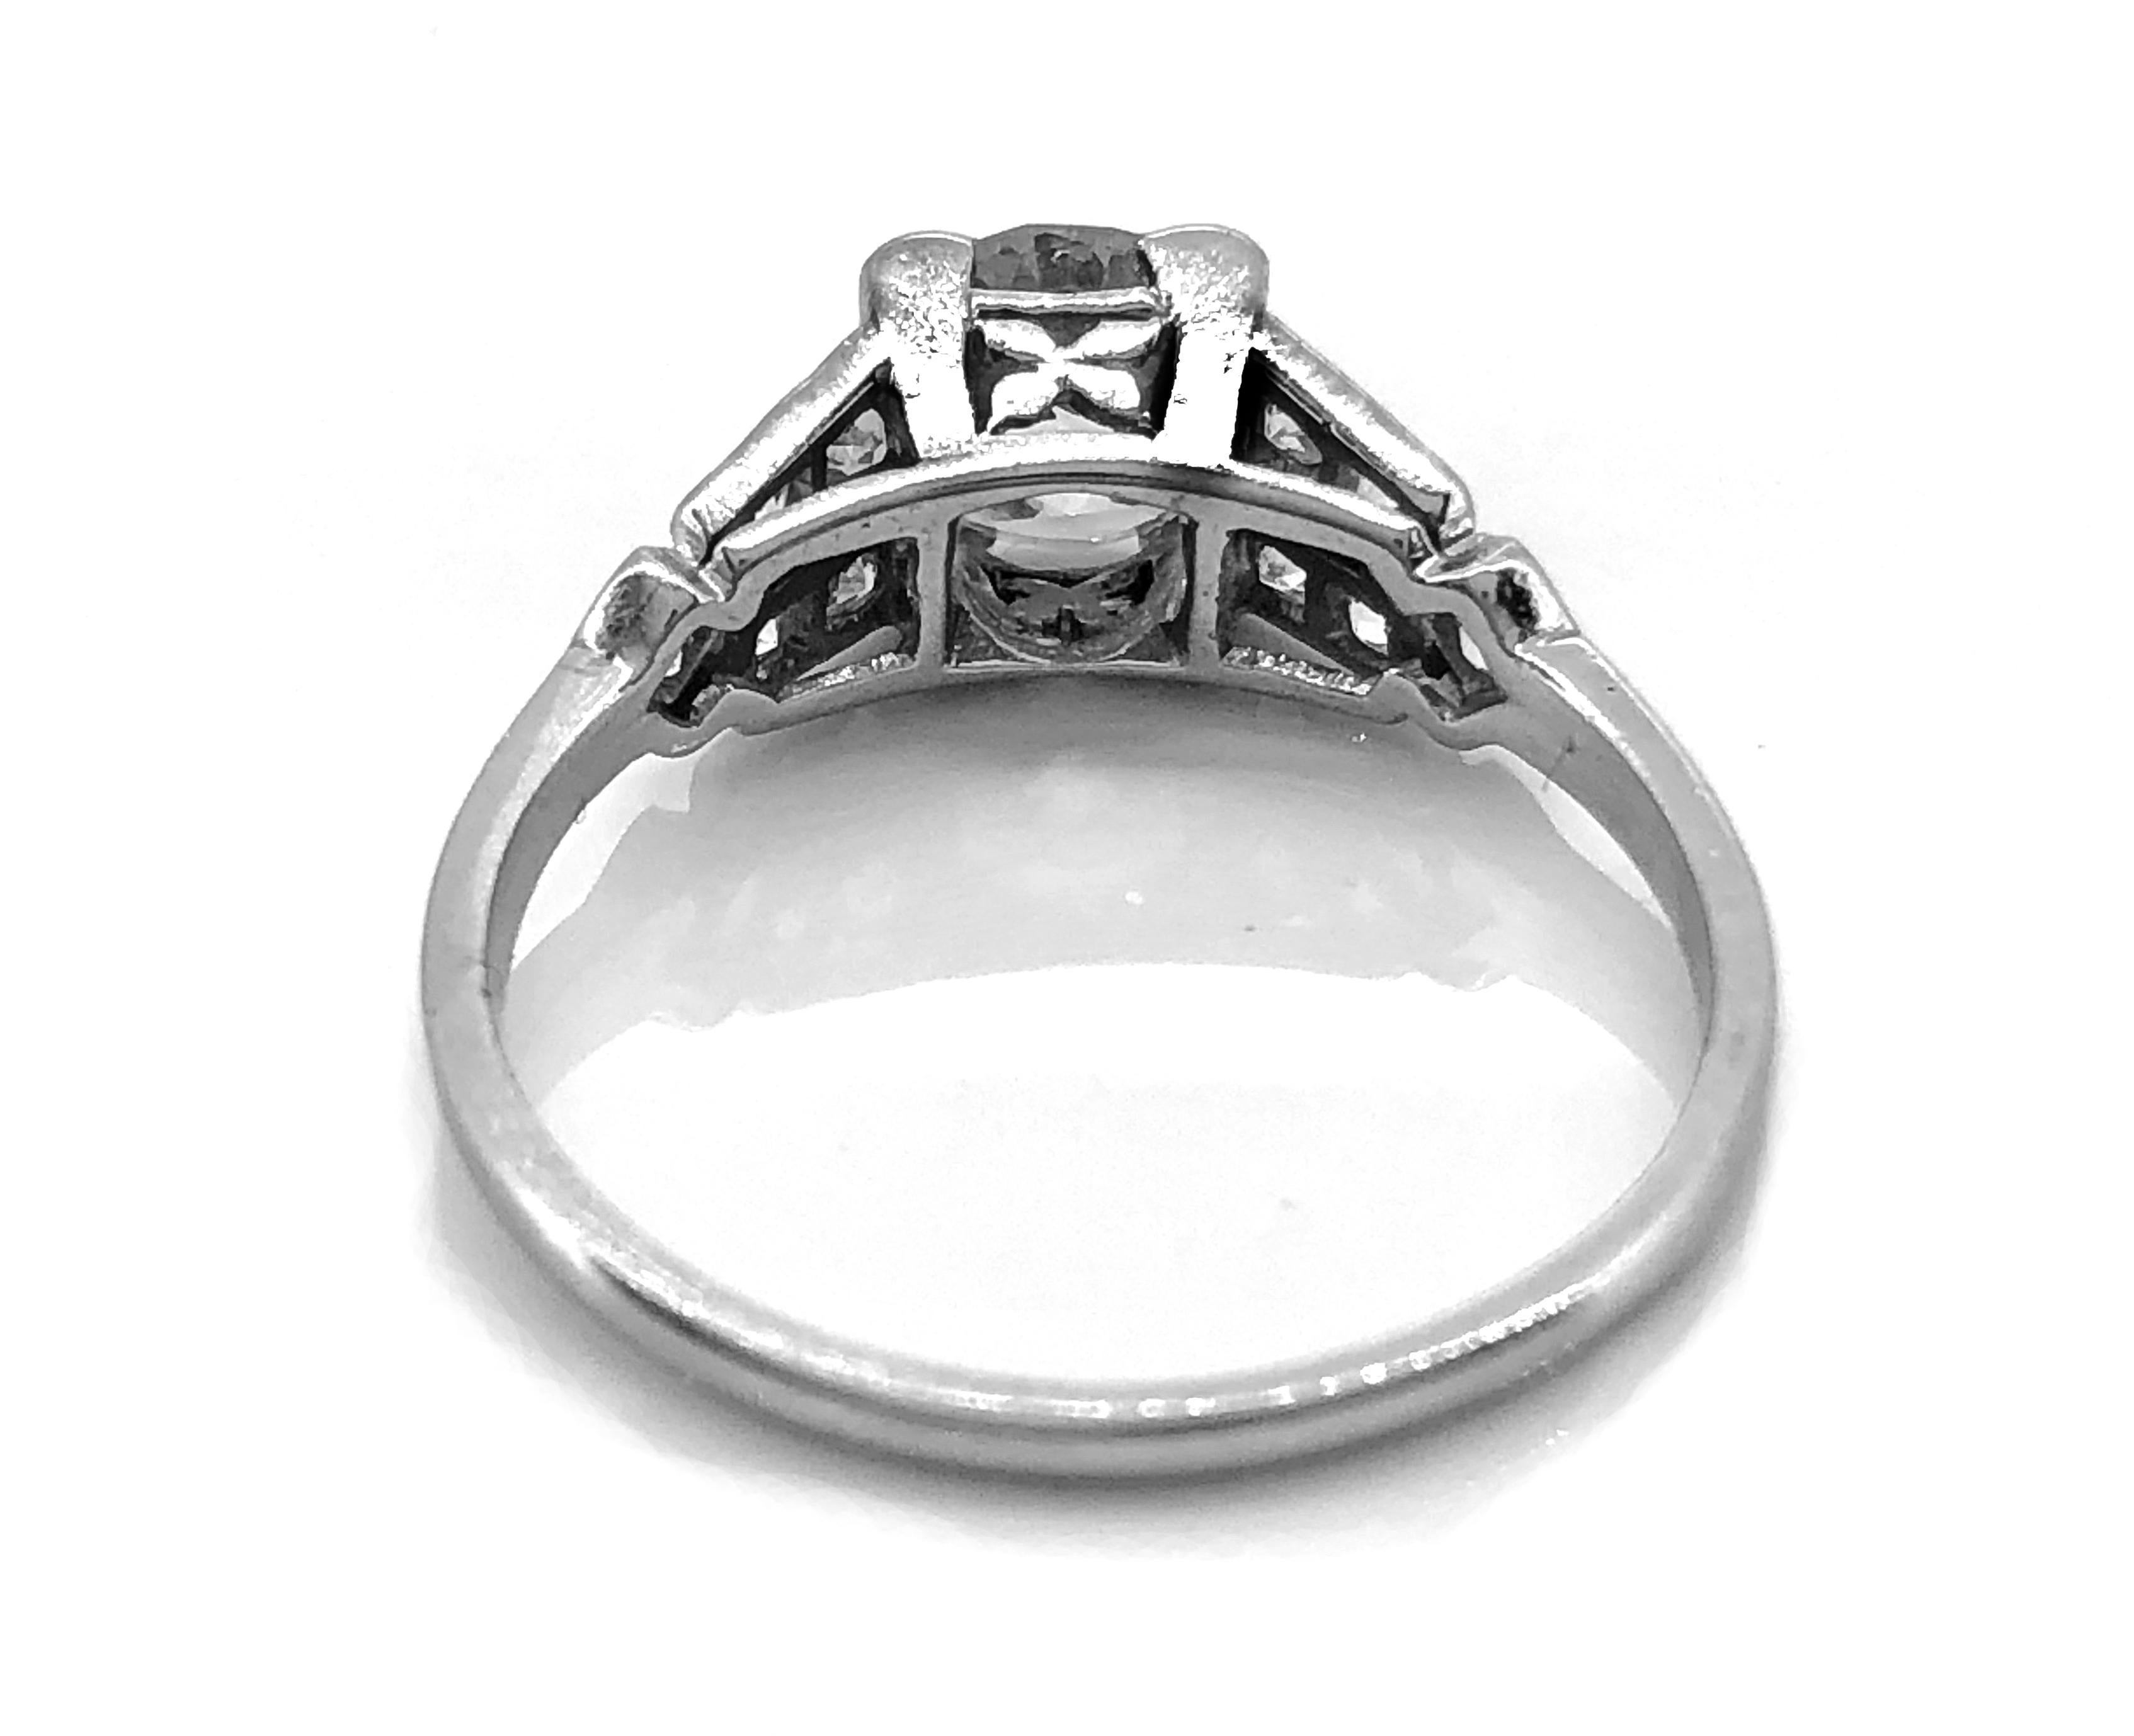 Old Mine Cut Antique Engagement Ring 1.55 Carat Diamond & 18K White Gold Edwardian